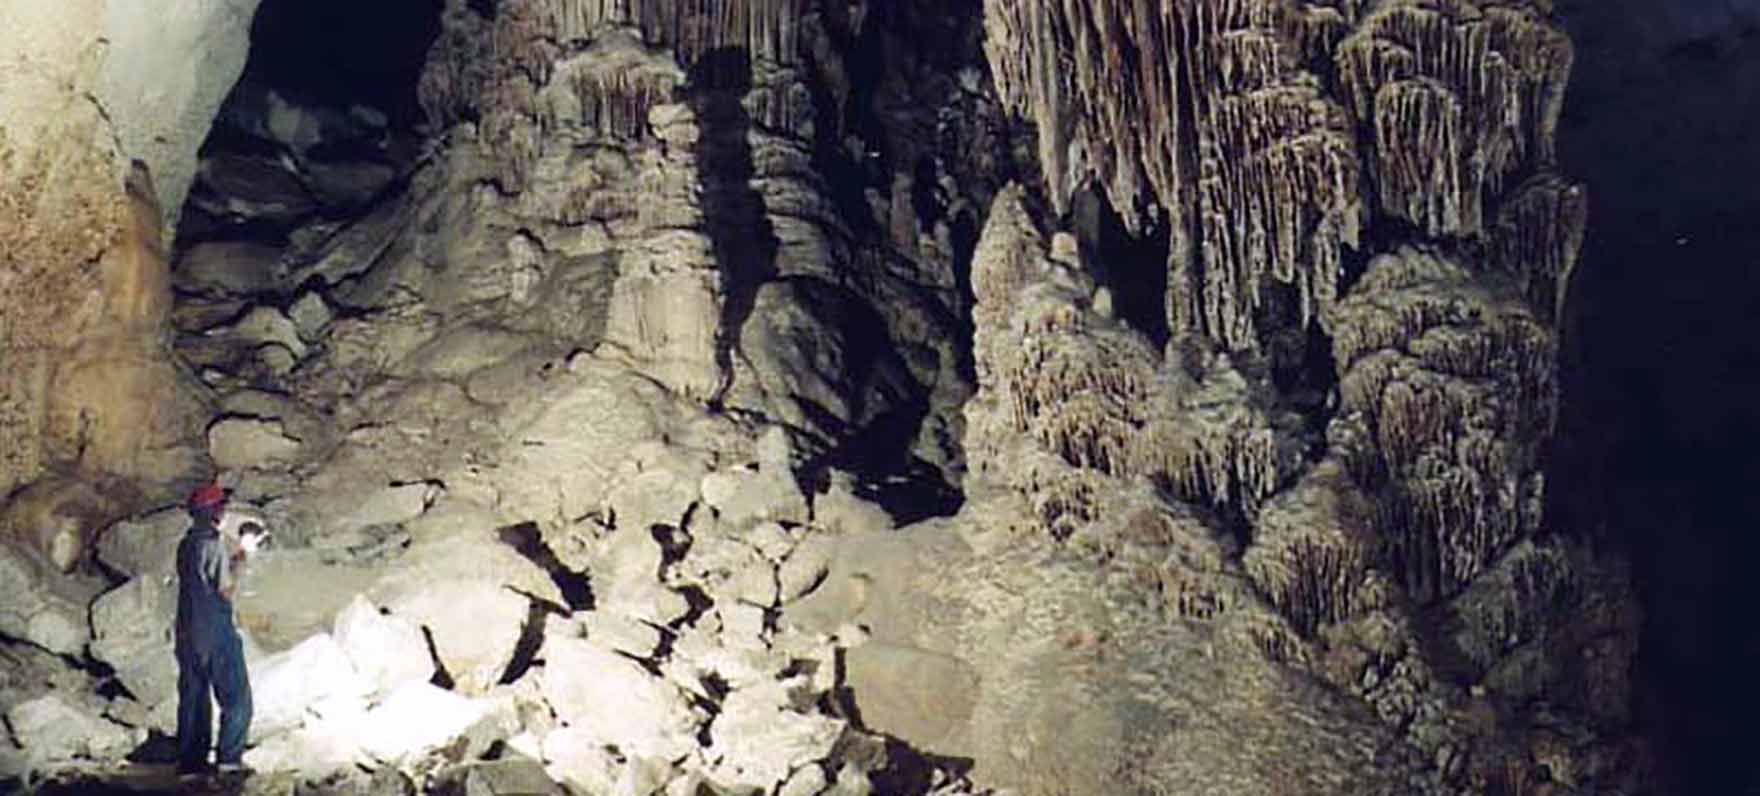 Kickapoo cavern state park